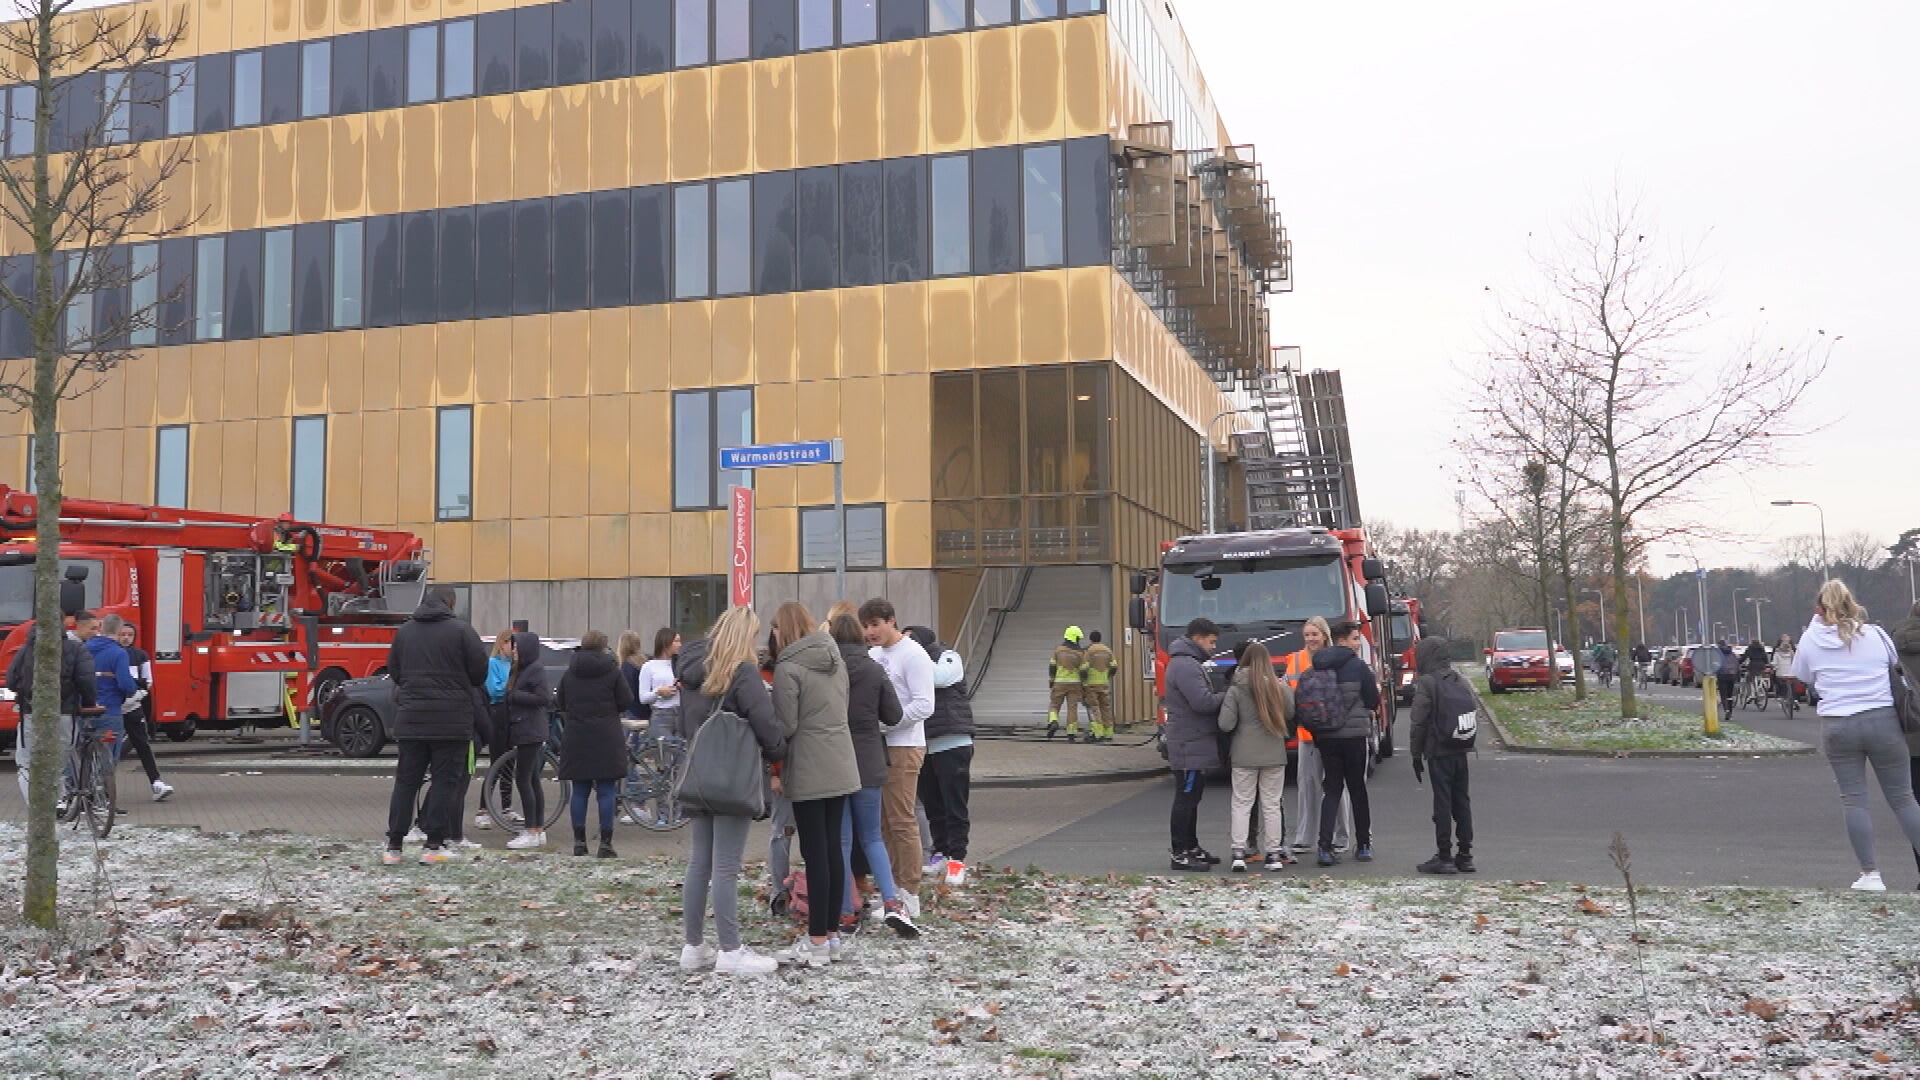 School in Tilburg ontruimd na brand in kleedkamer gymzaal